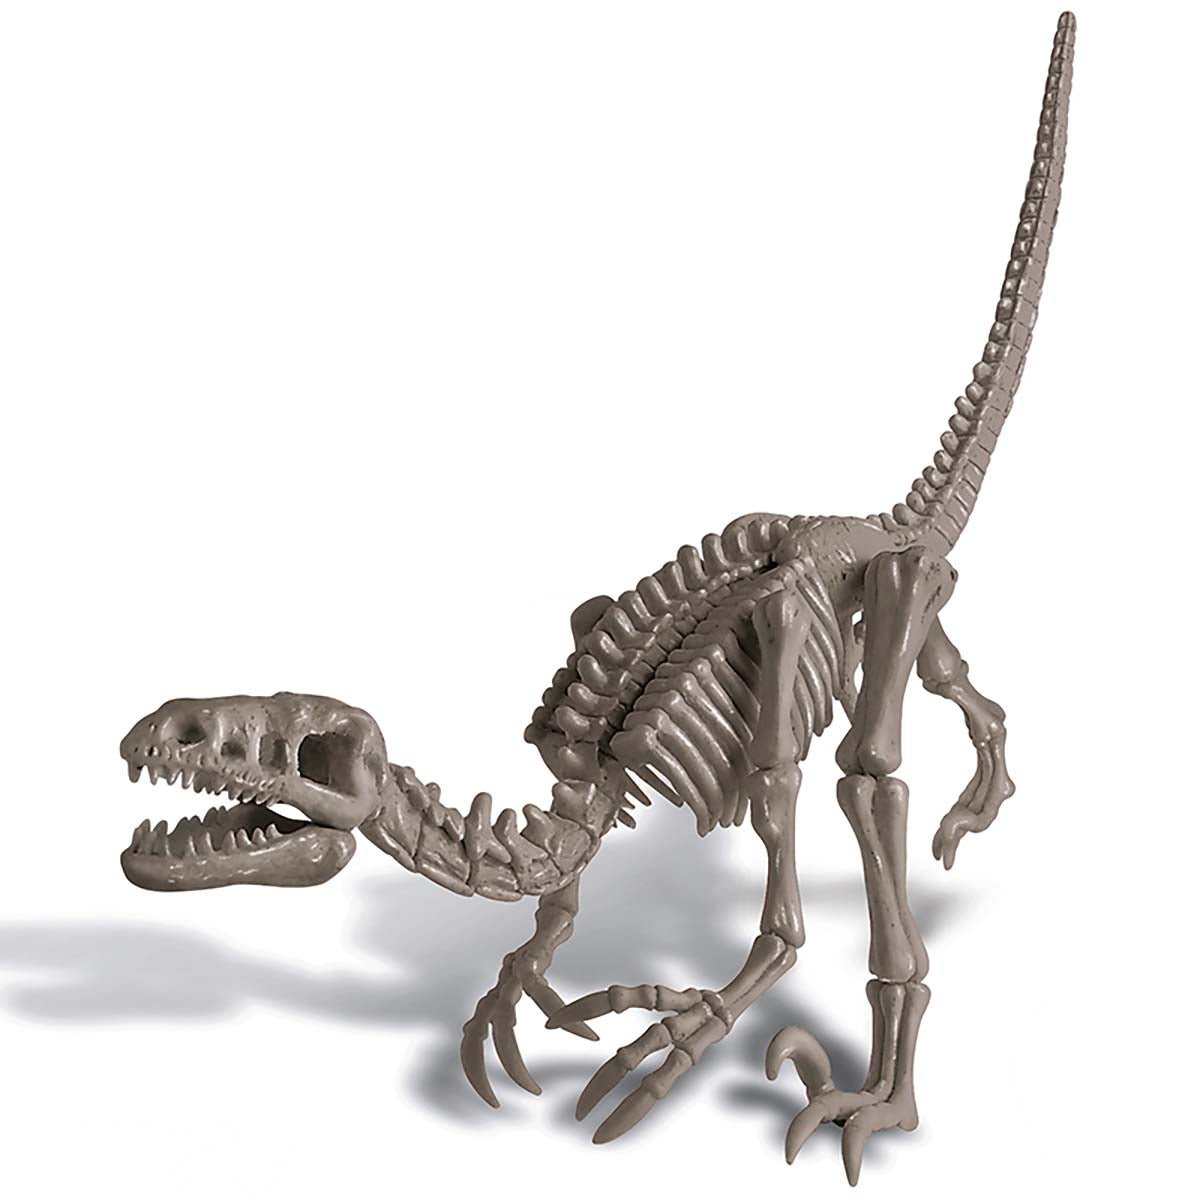 Velociraptor Skeleton Excavation Kit